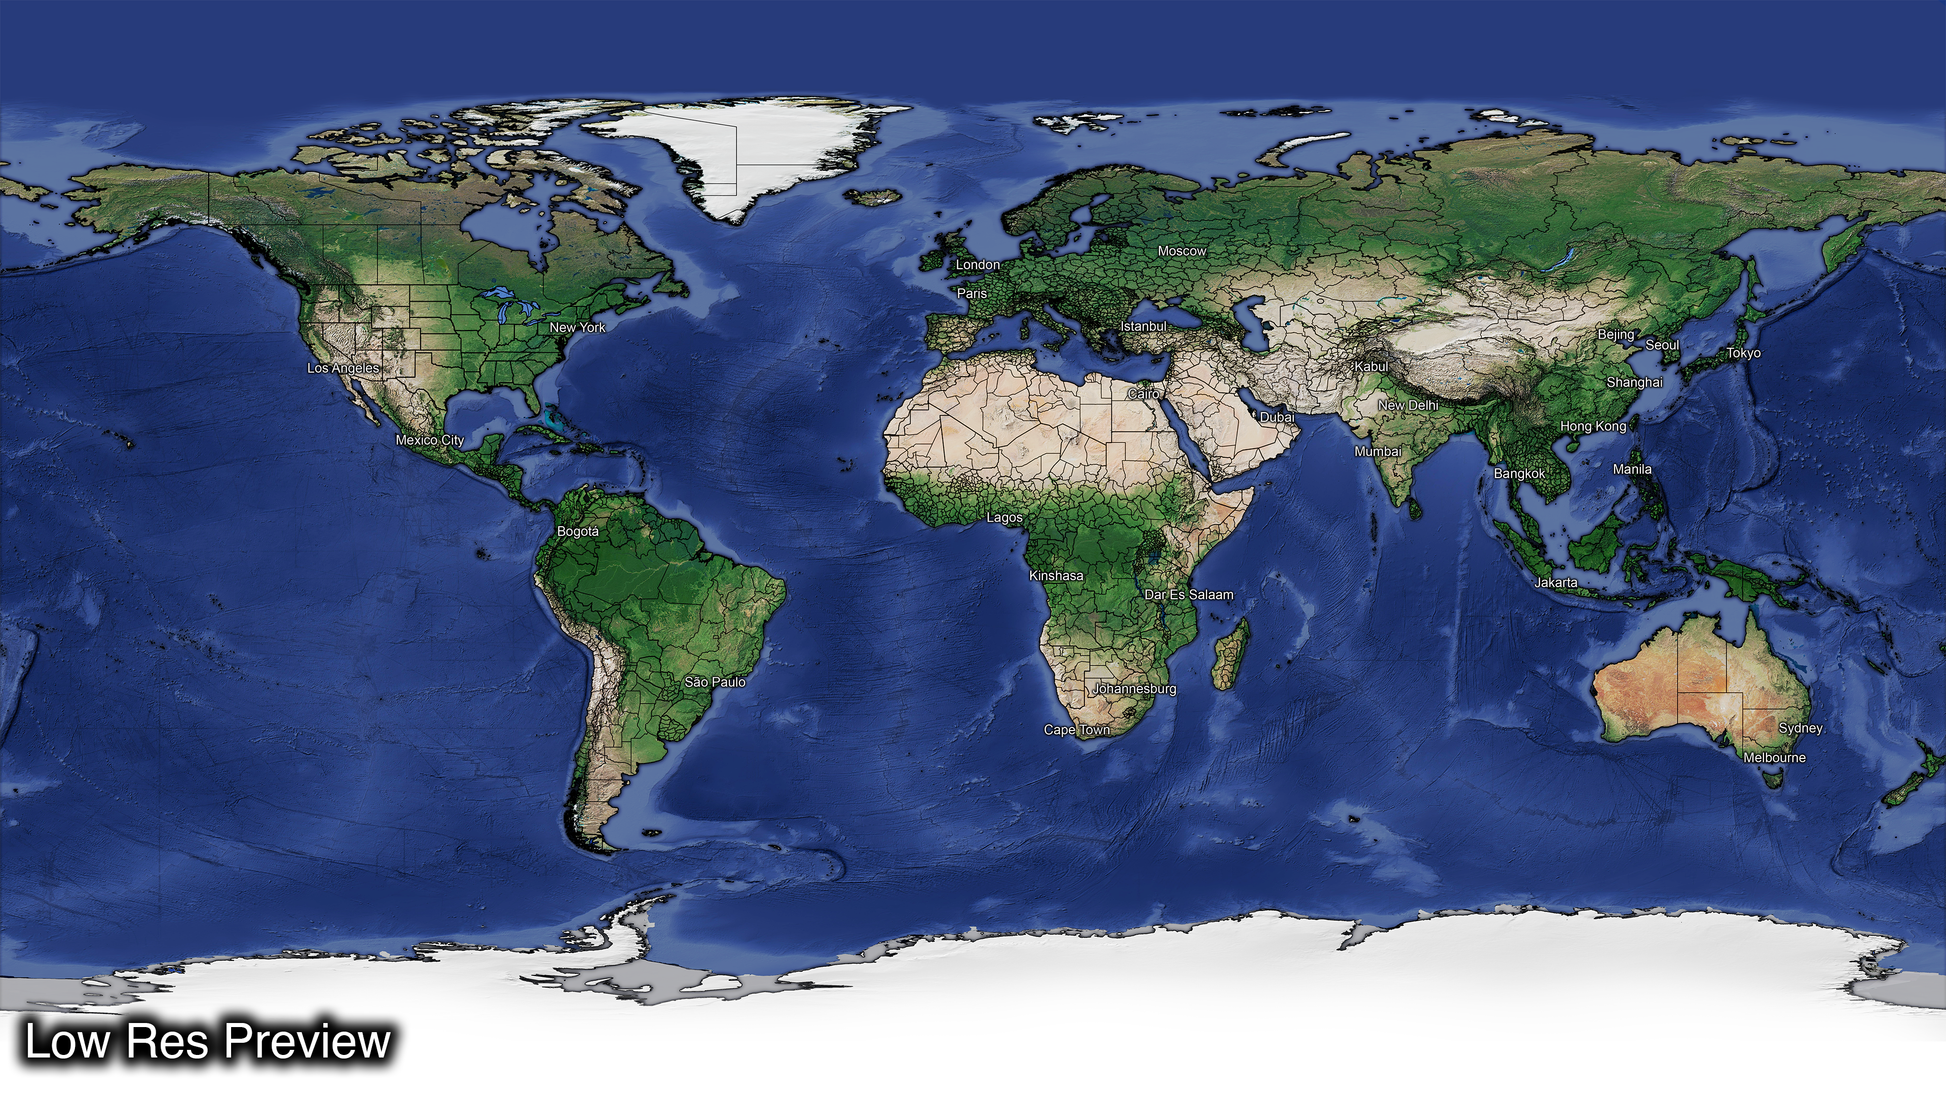 Trilogymap.com HD 16k Digital World Map! Providing the Highest definition Most Customizable digital maps on the market